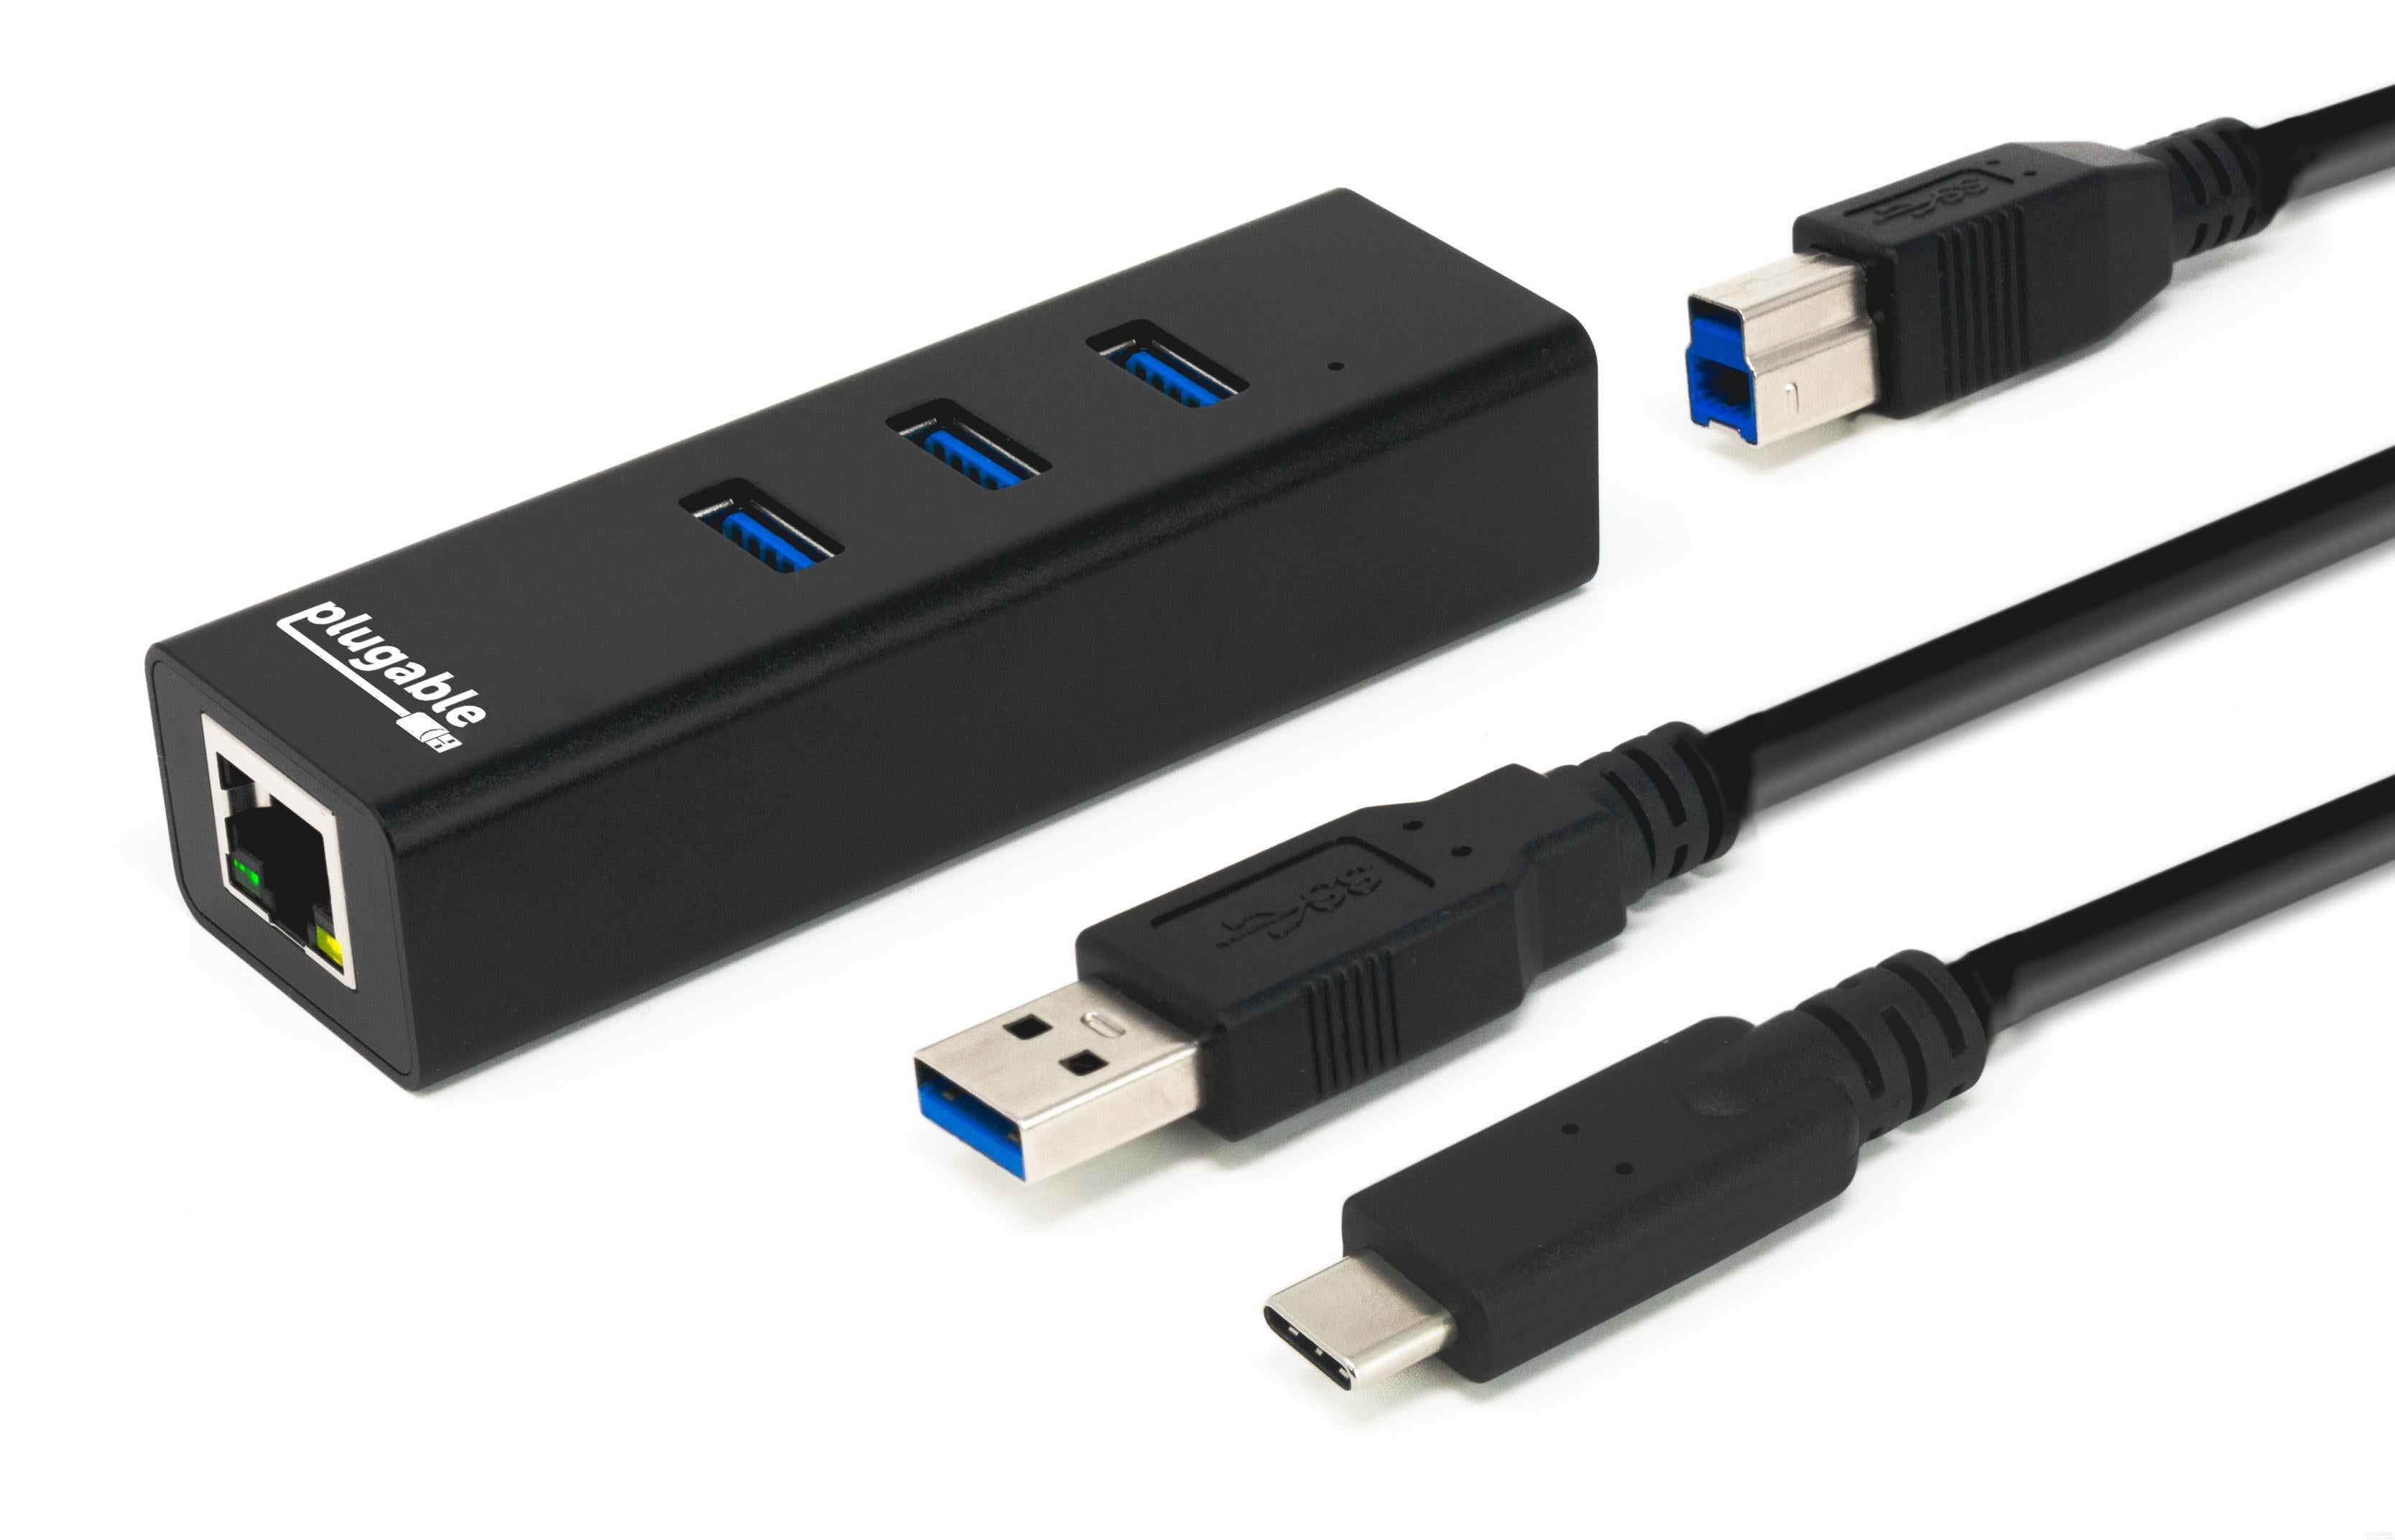 Plugable USB Bus Powered Hub with Gigabit Ethernet – Plugable Technologies